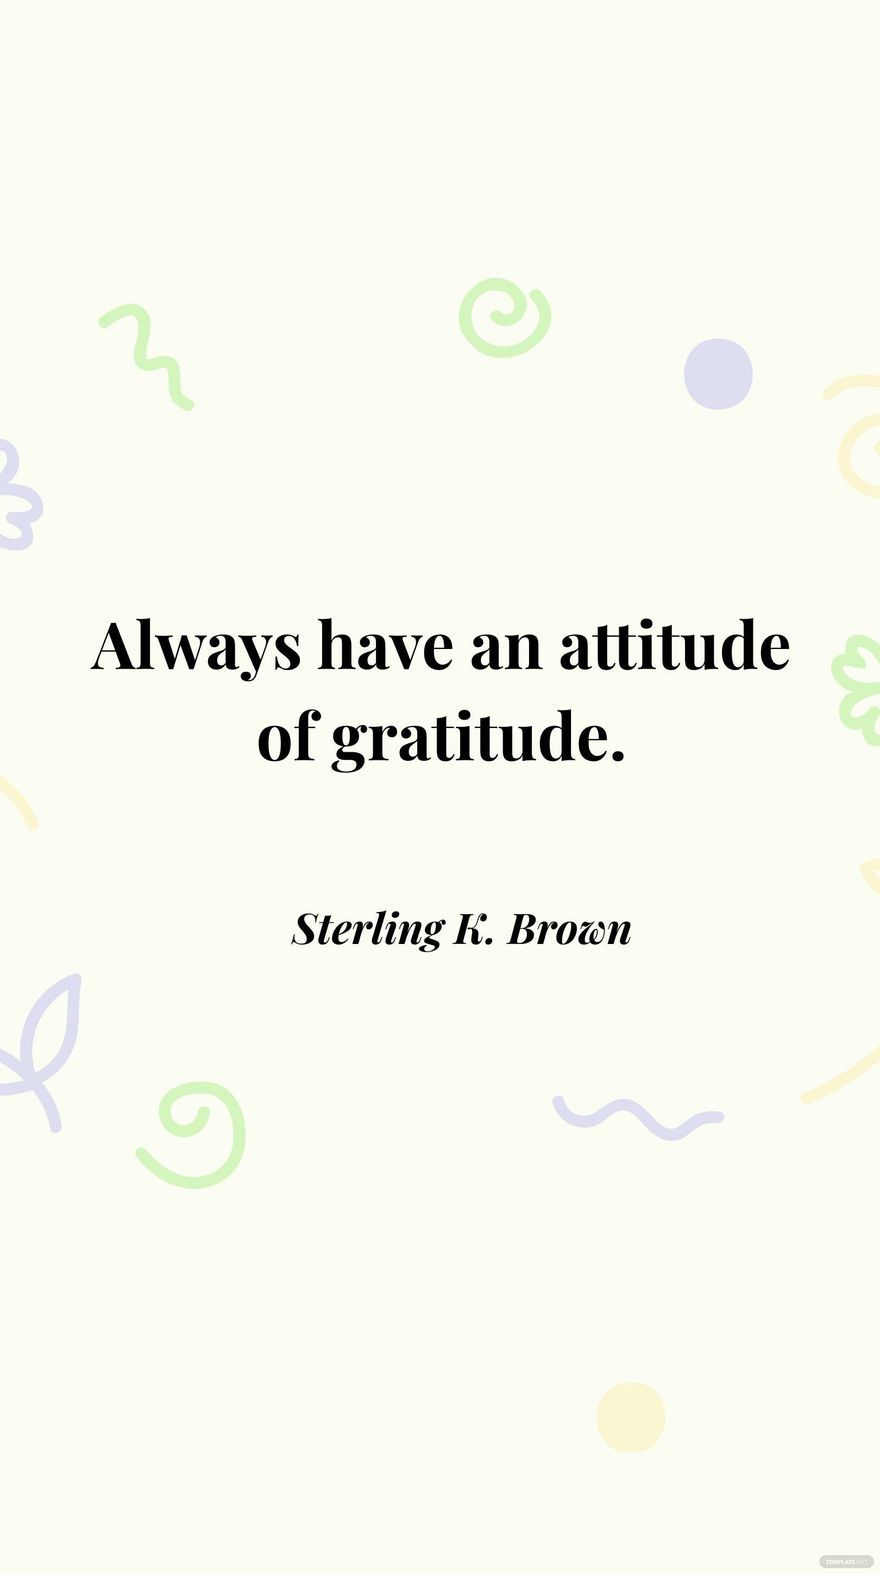 Sterling K. Brown - Always have an attitude of gratitude. in JPG